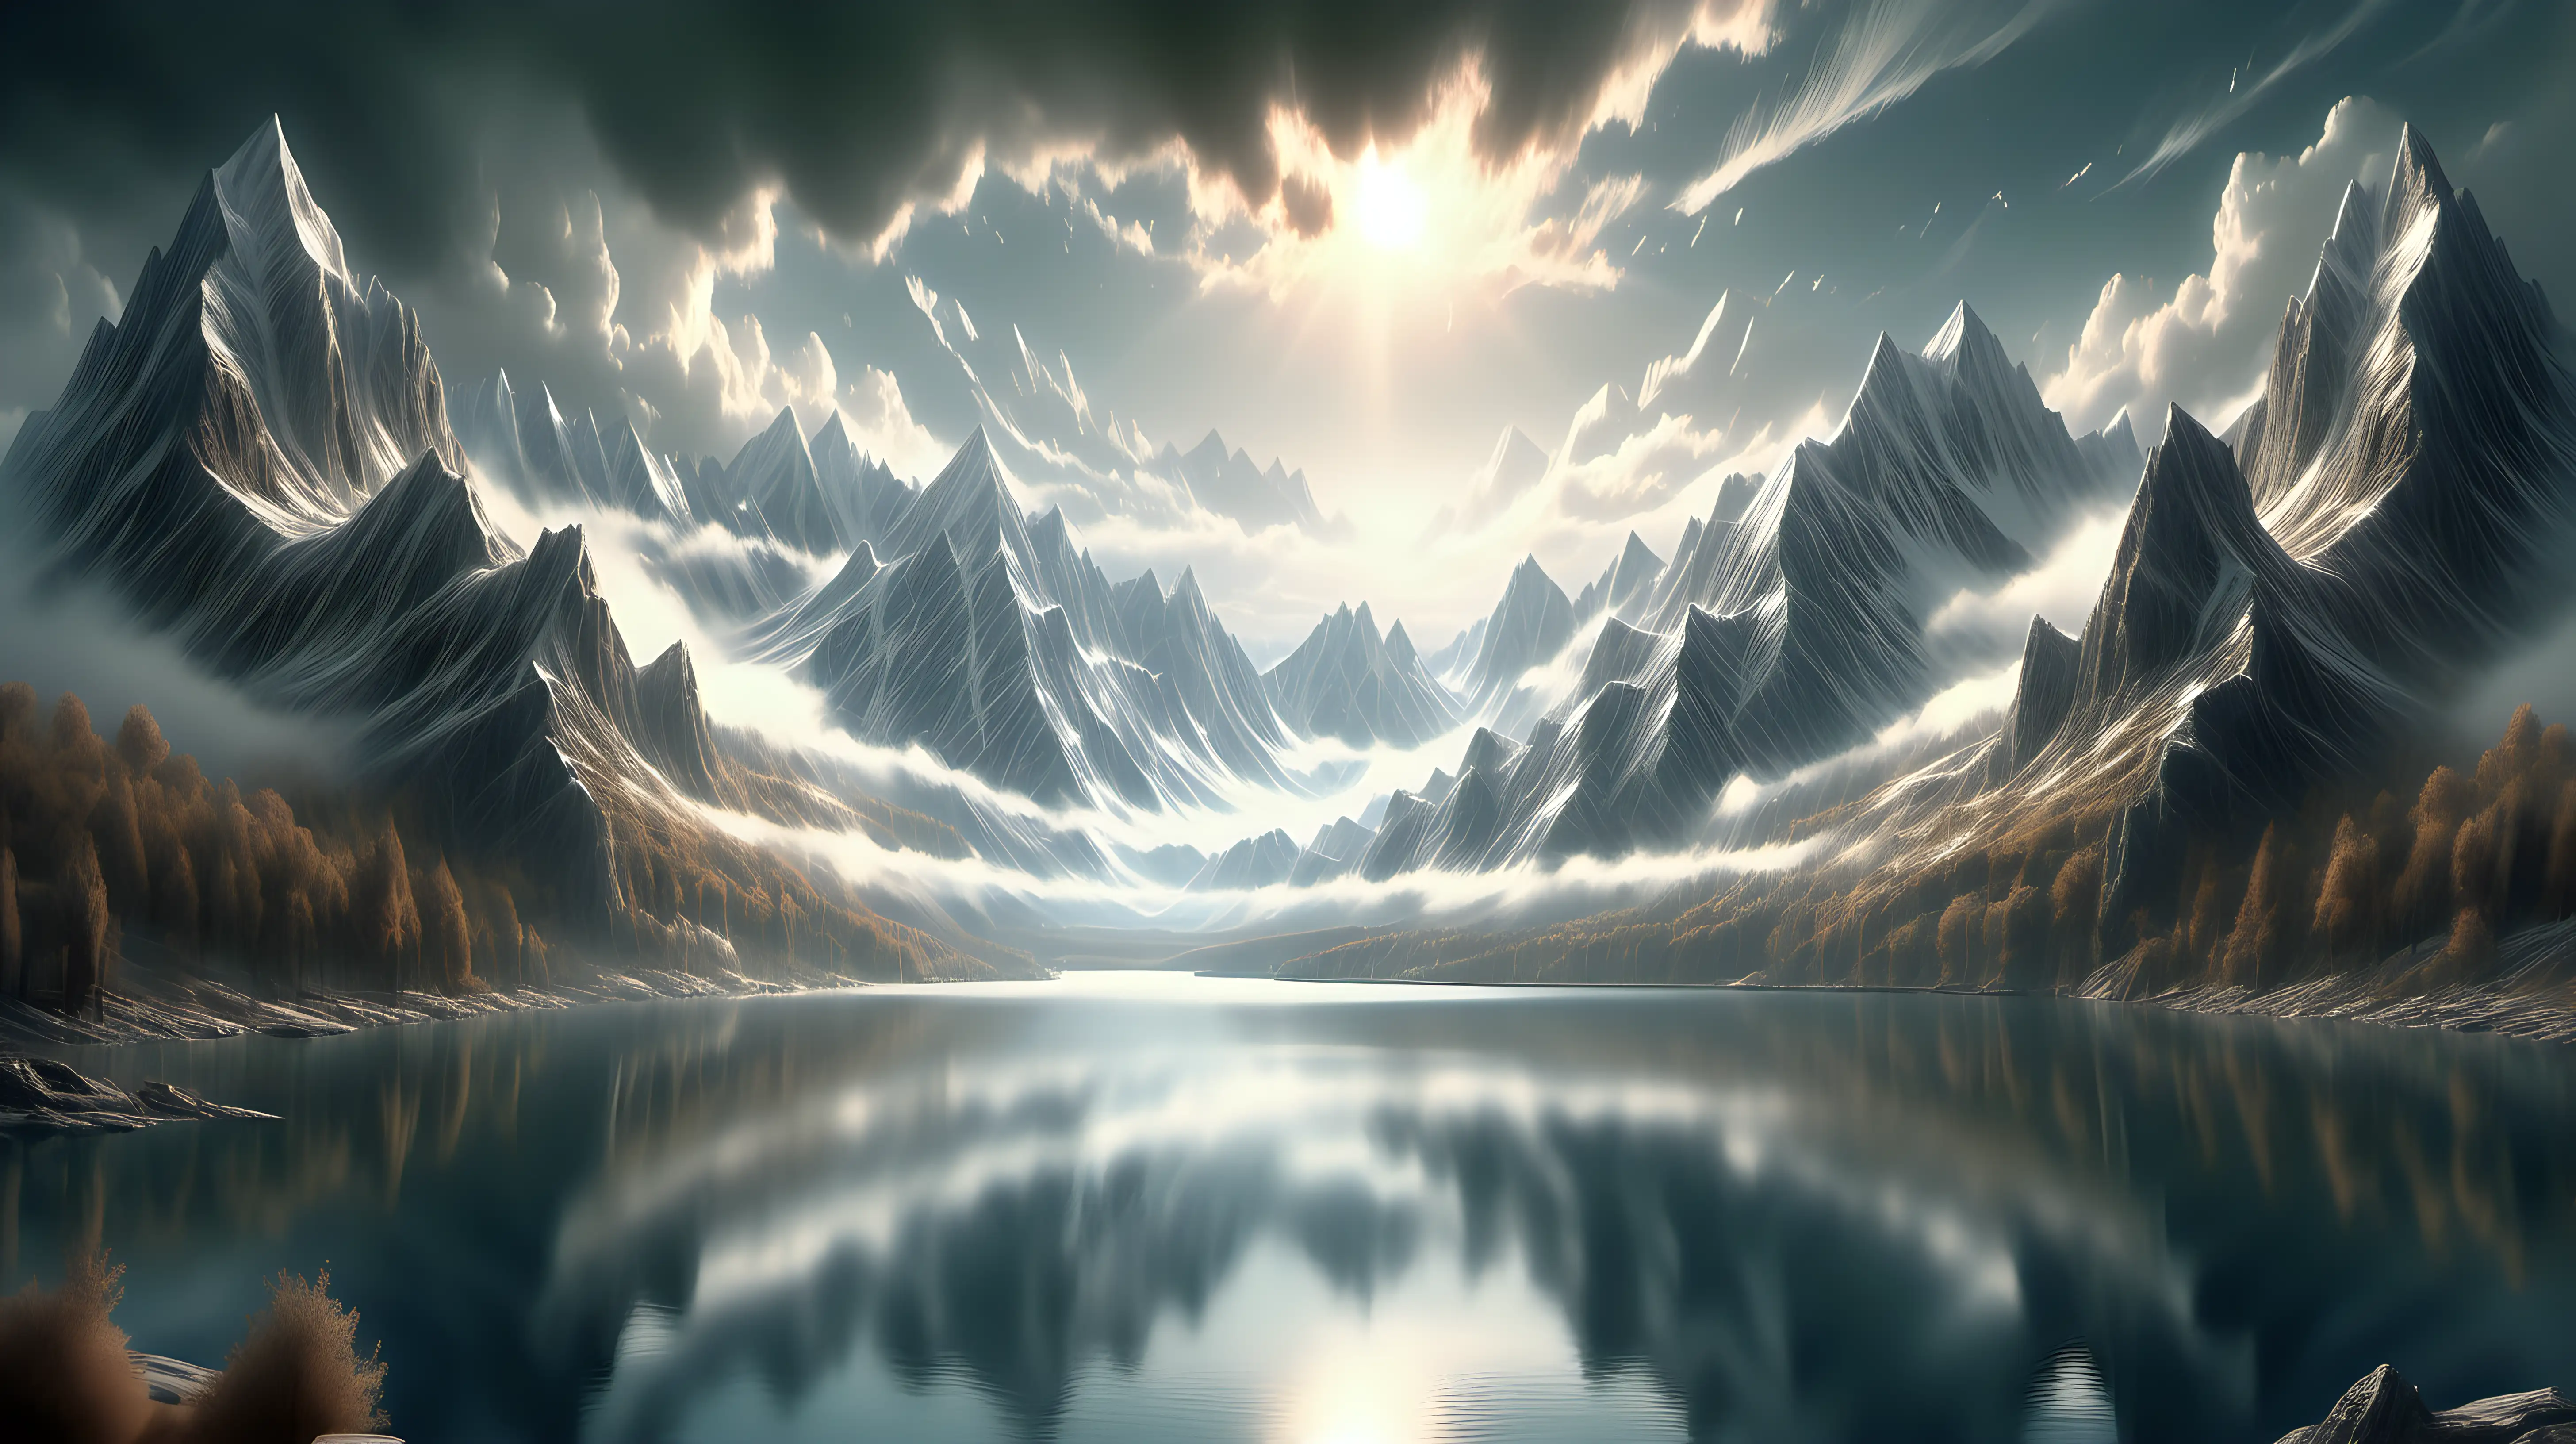 Serene Mountain Lake in Crisp Detail Heavenly Landscape with Moody Lighting